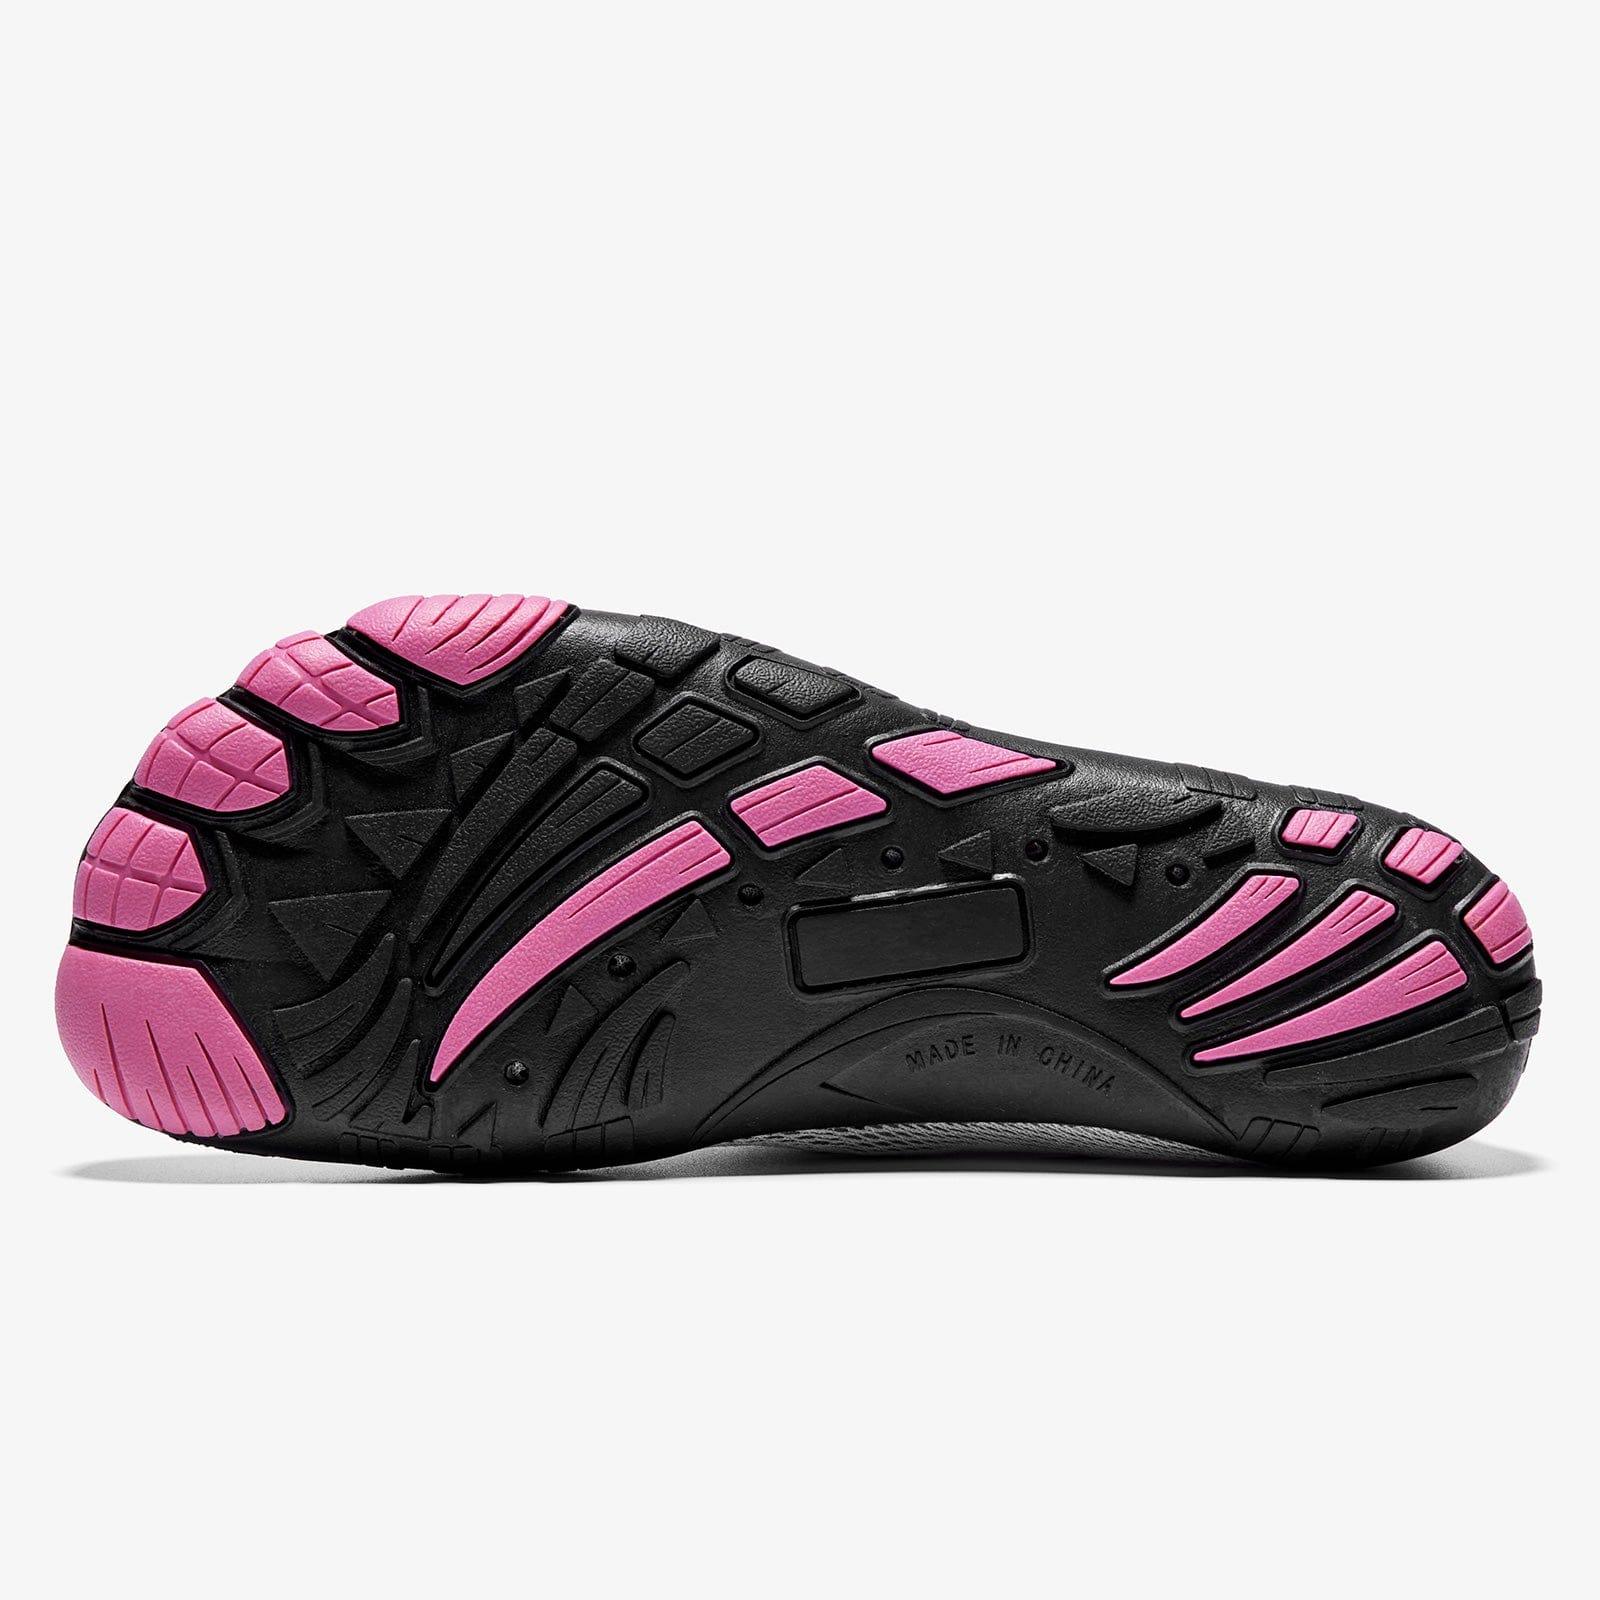 merknaam stok Graag gedaan Hiitave Women's Barefoot Mesh Water Shoes | Breathable & Non-Slip |  Hiitavegear – AleaderGear